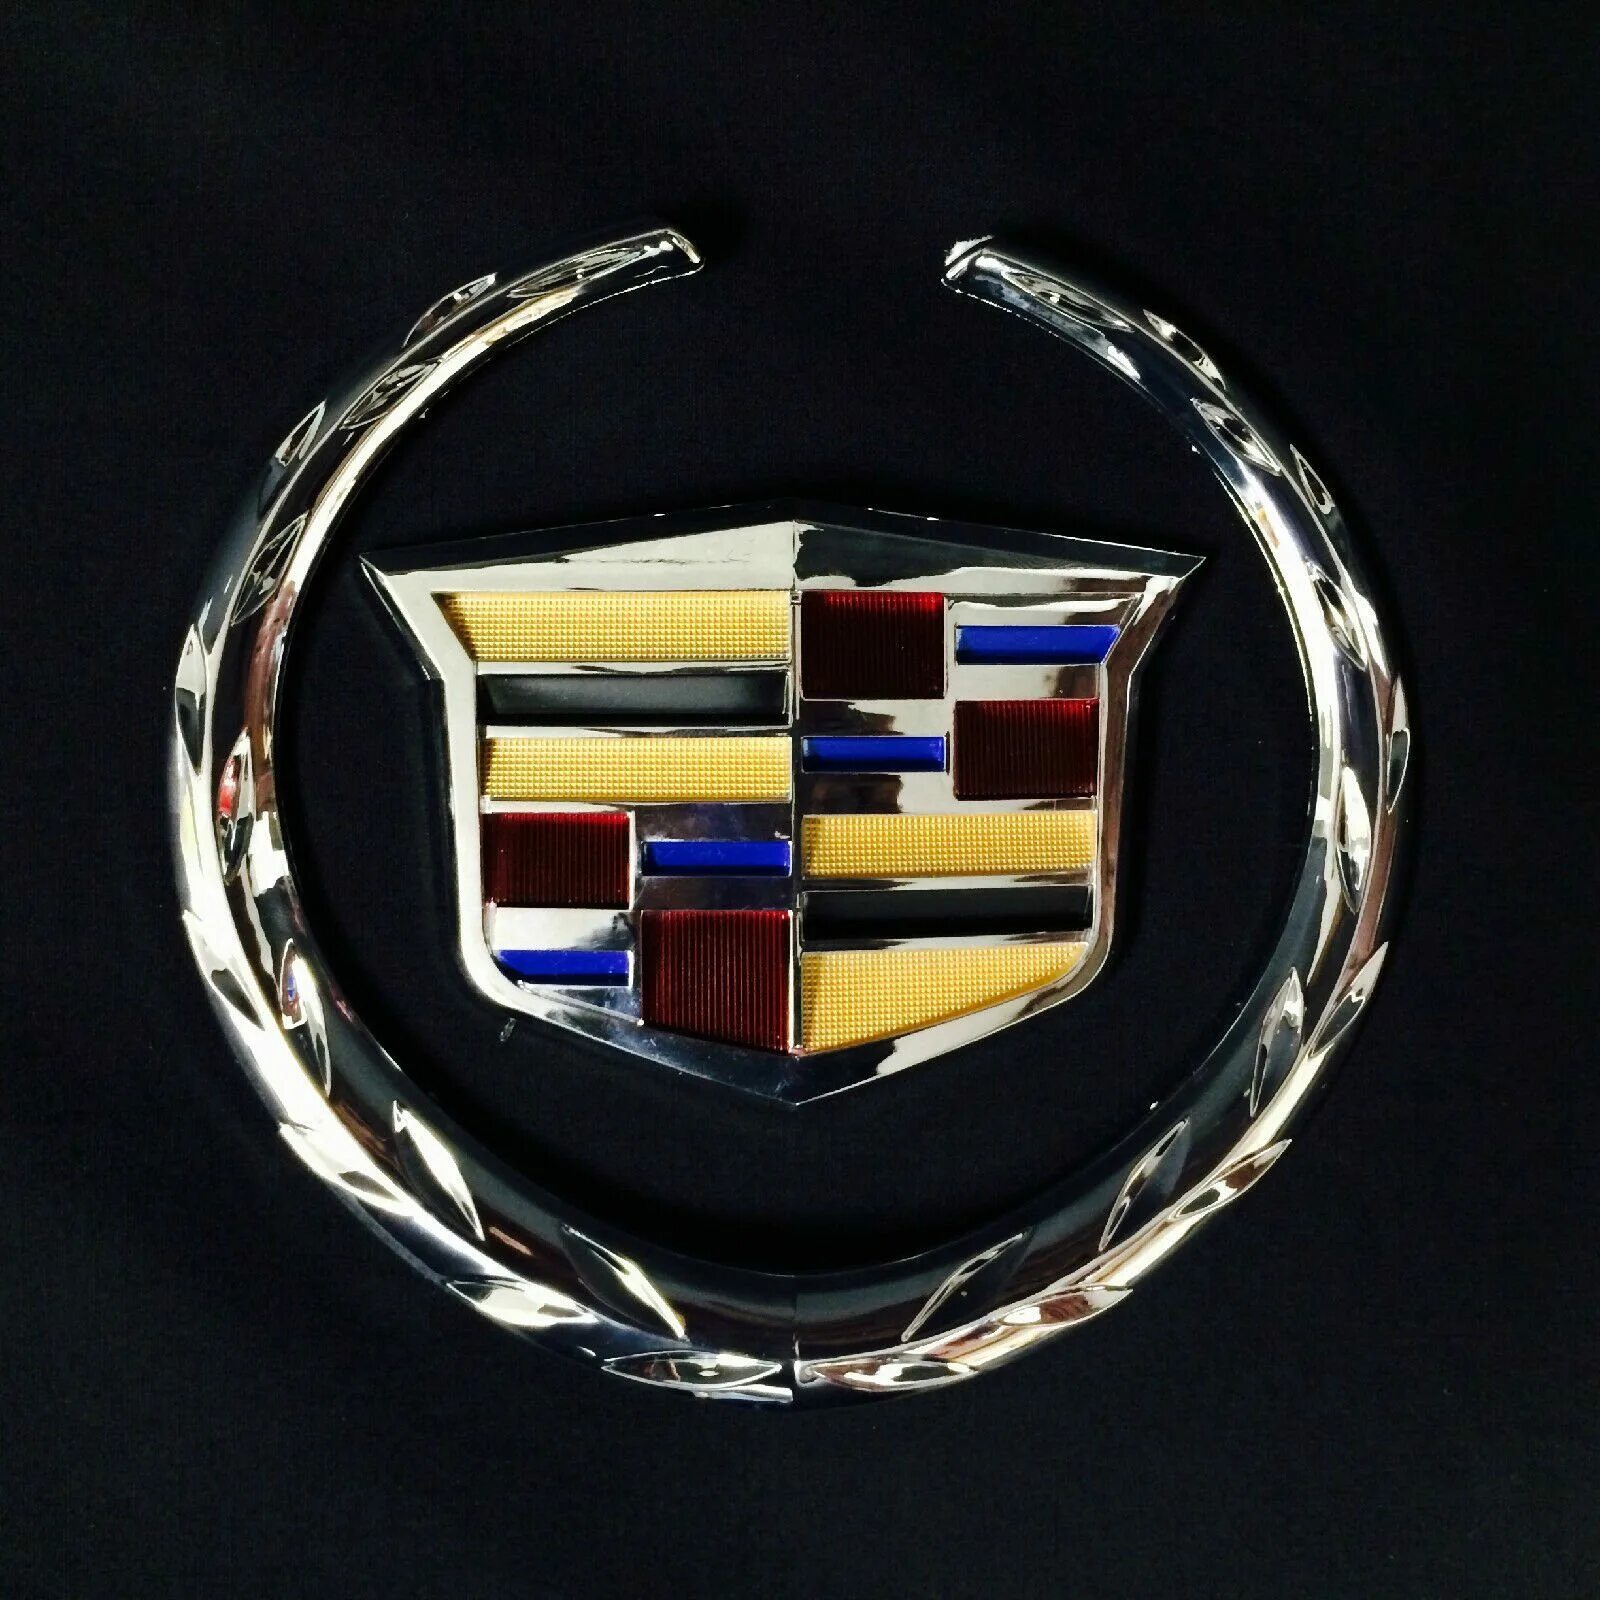 Кадиллак марка. Значок Cadillac Эскалейд. Cadillac Escalade марка. Значок Кадиллака и Джилли.